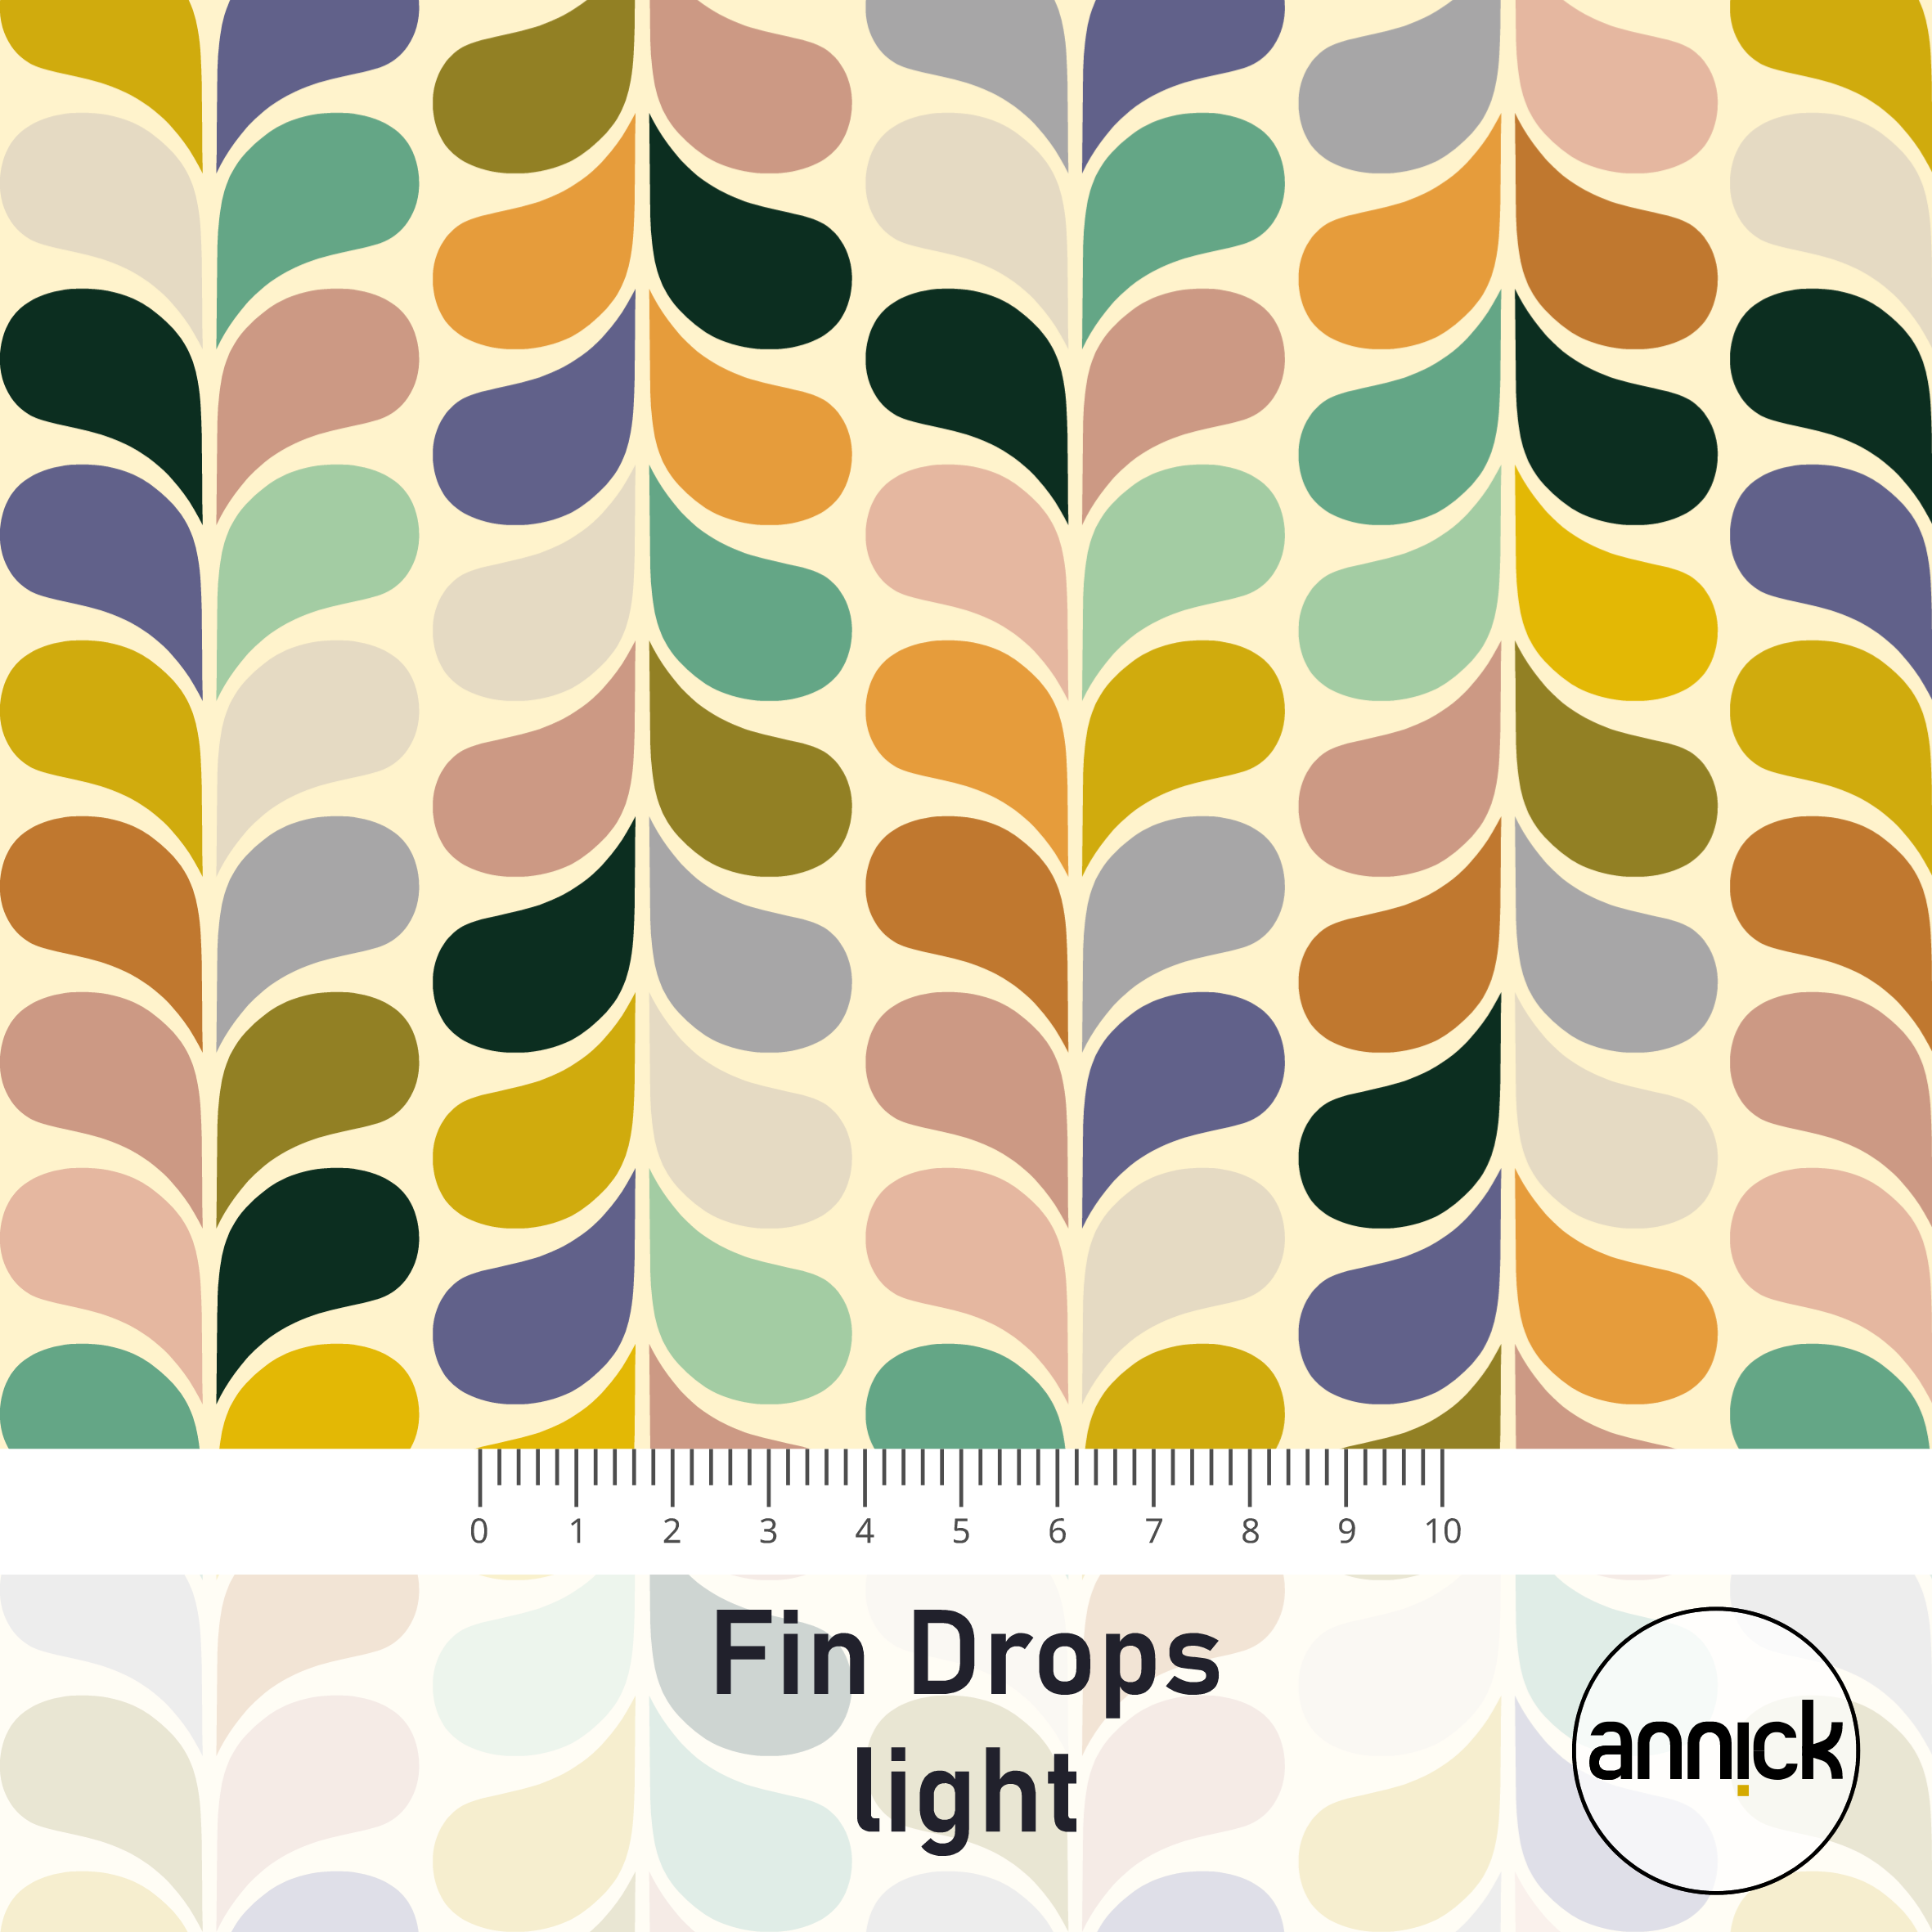 Fin Drops Light